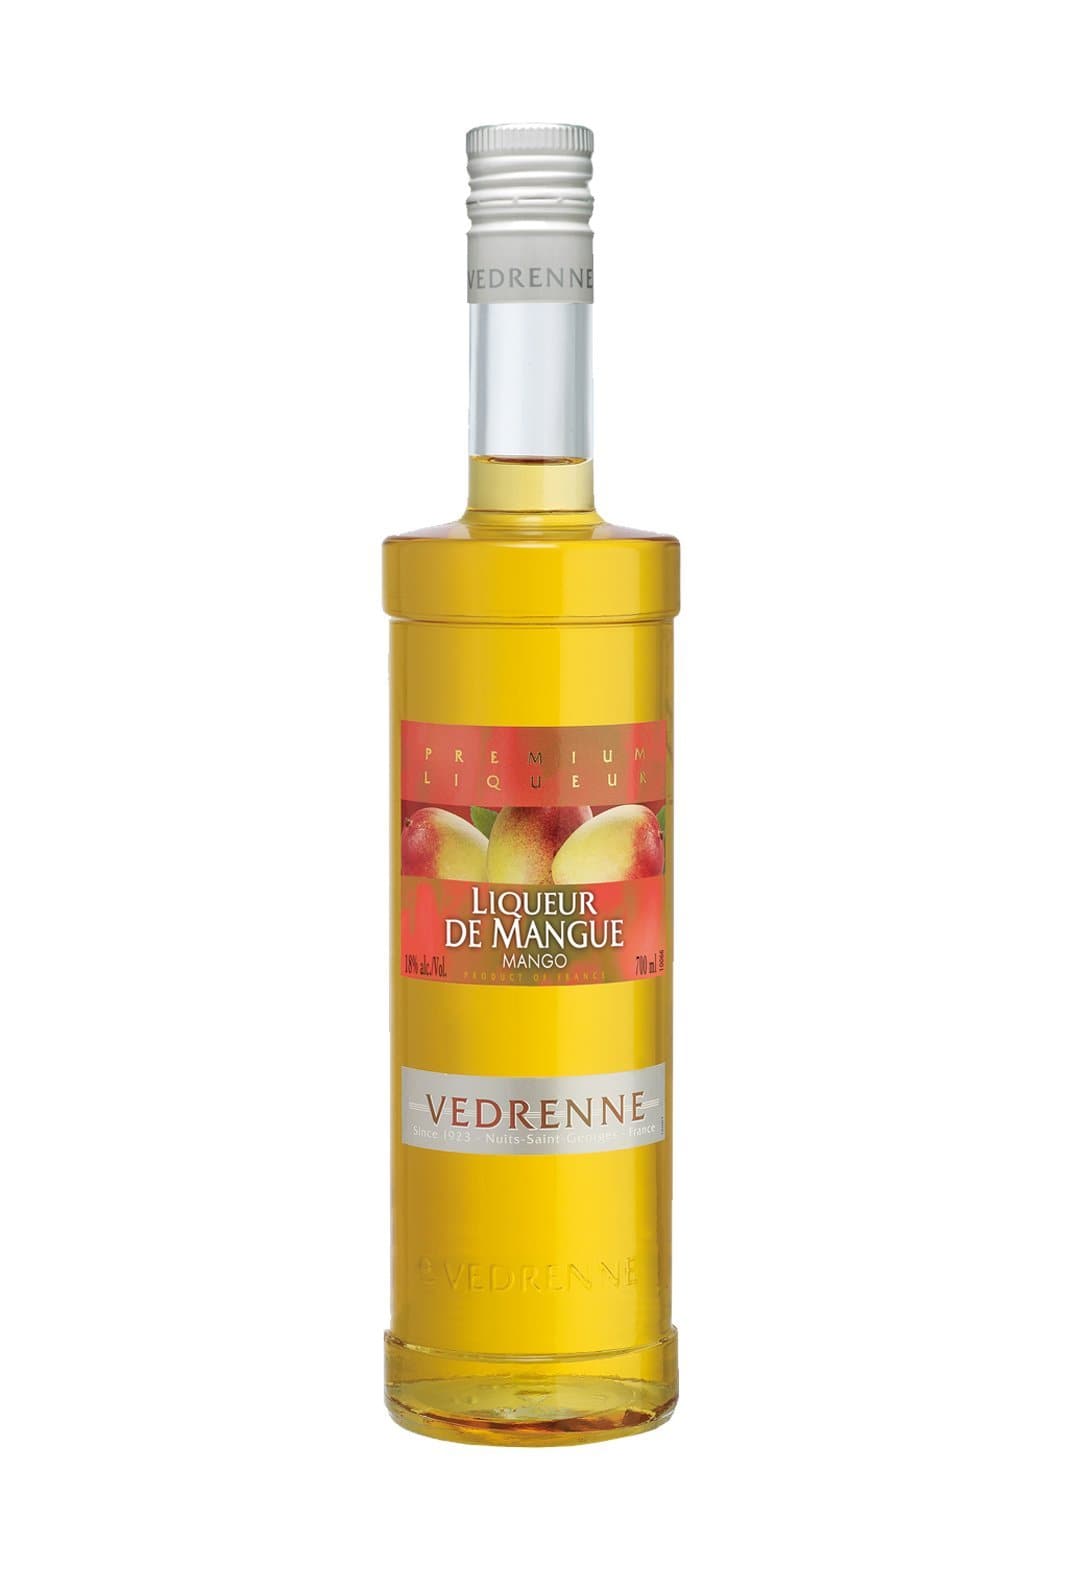 Vedrenne Liqueur de Mangue (Mango) 18% 700ml | Liqueurs | Shop online at Spirits of France